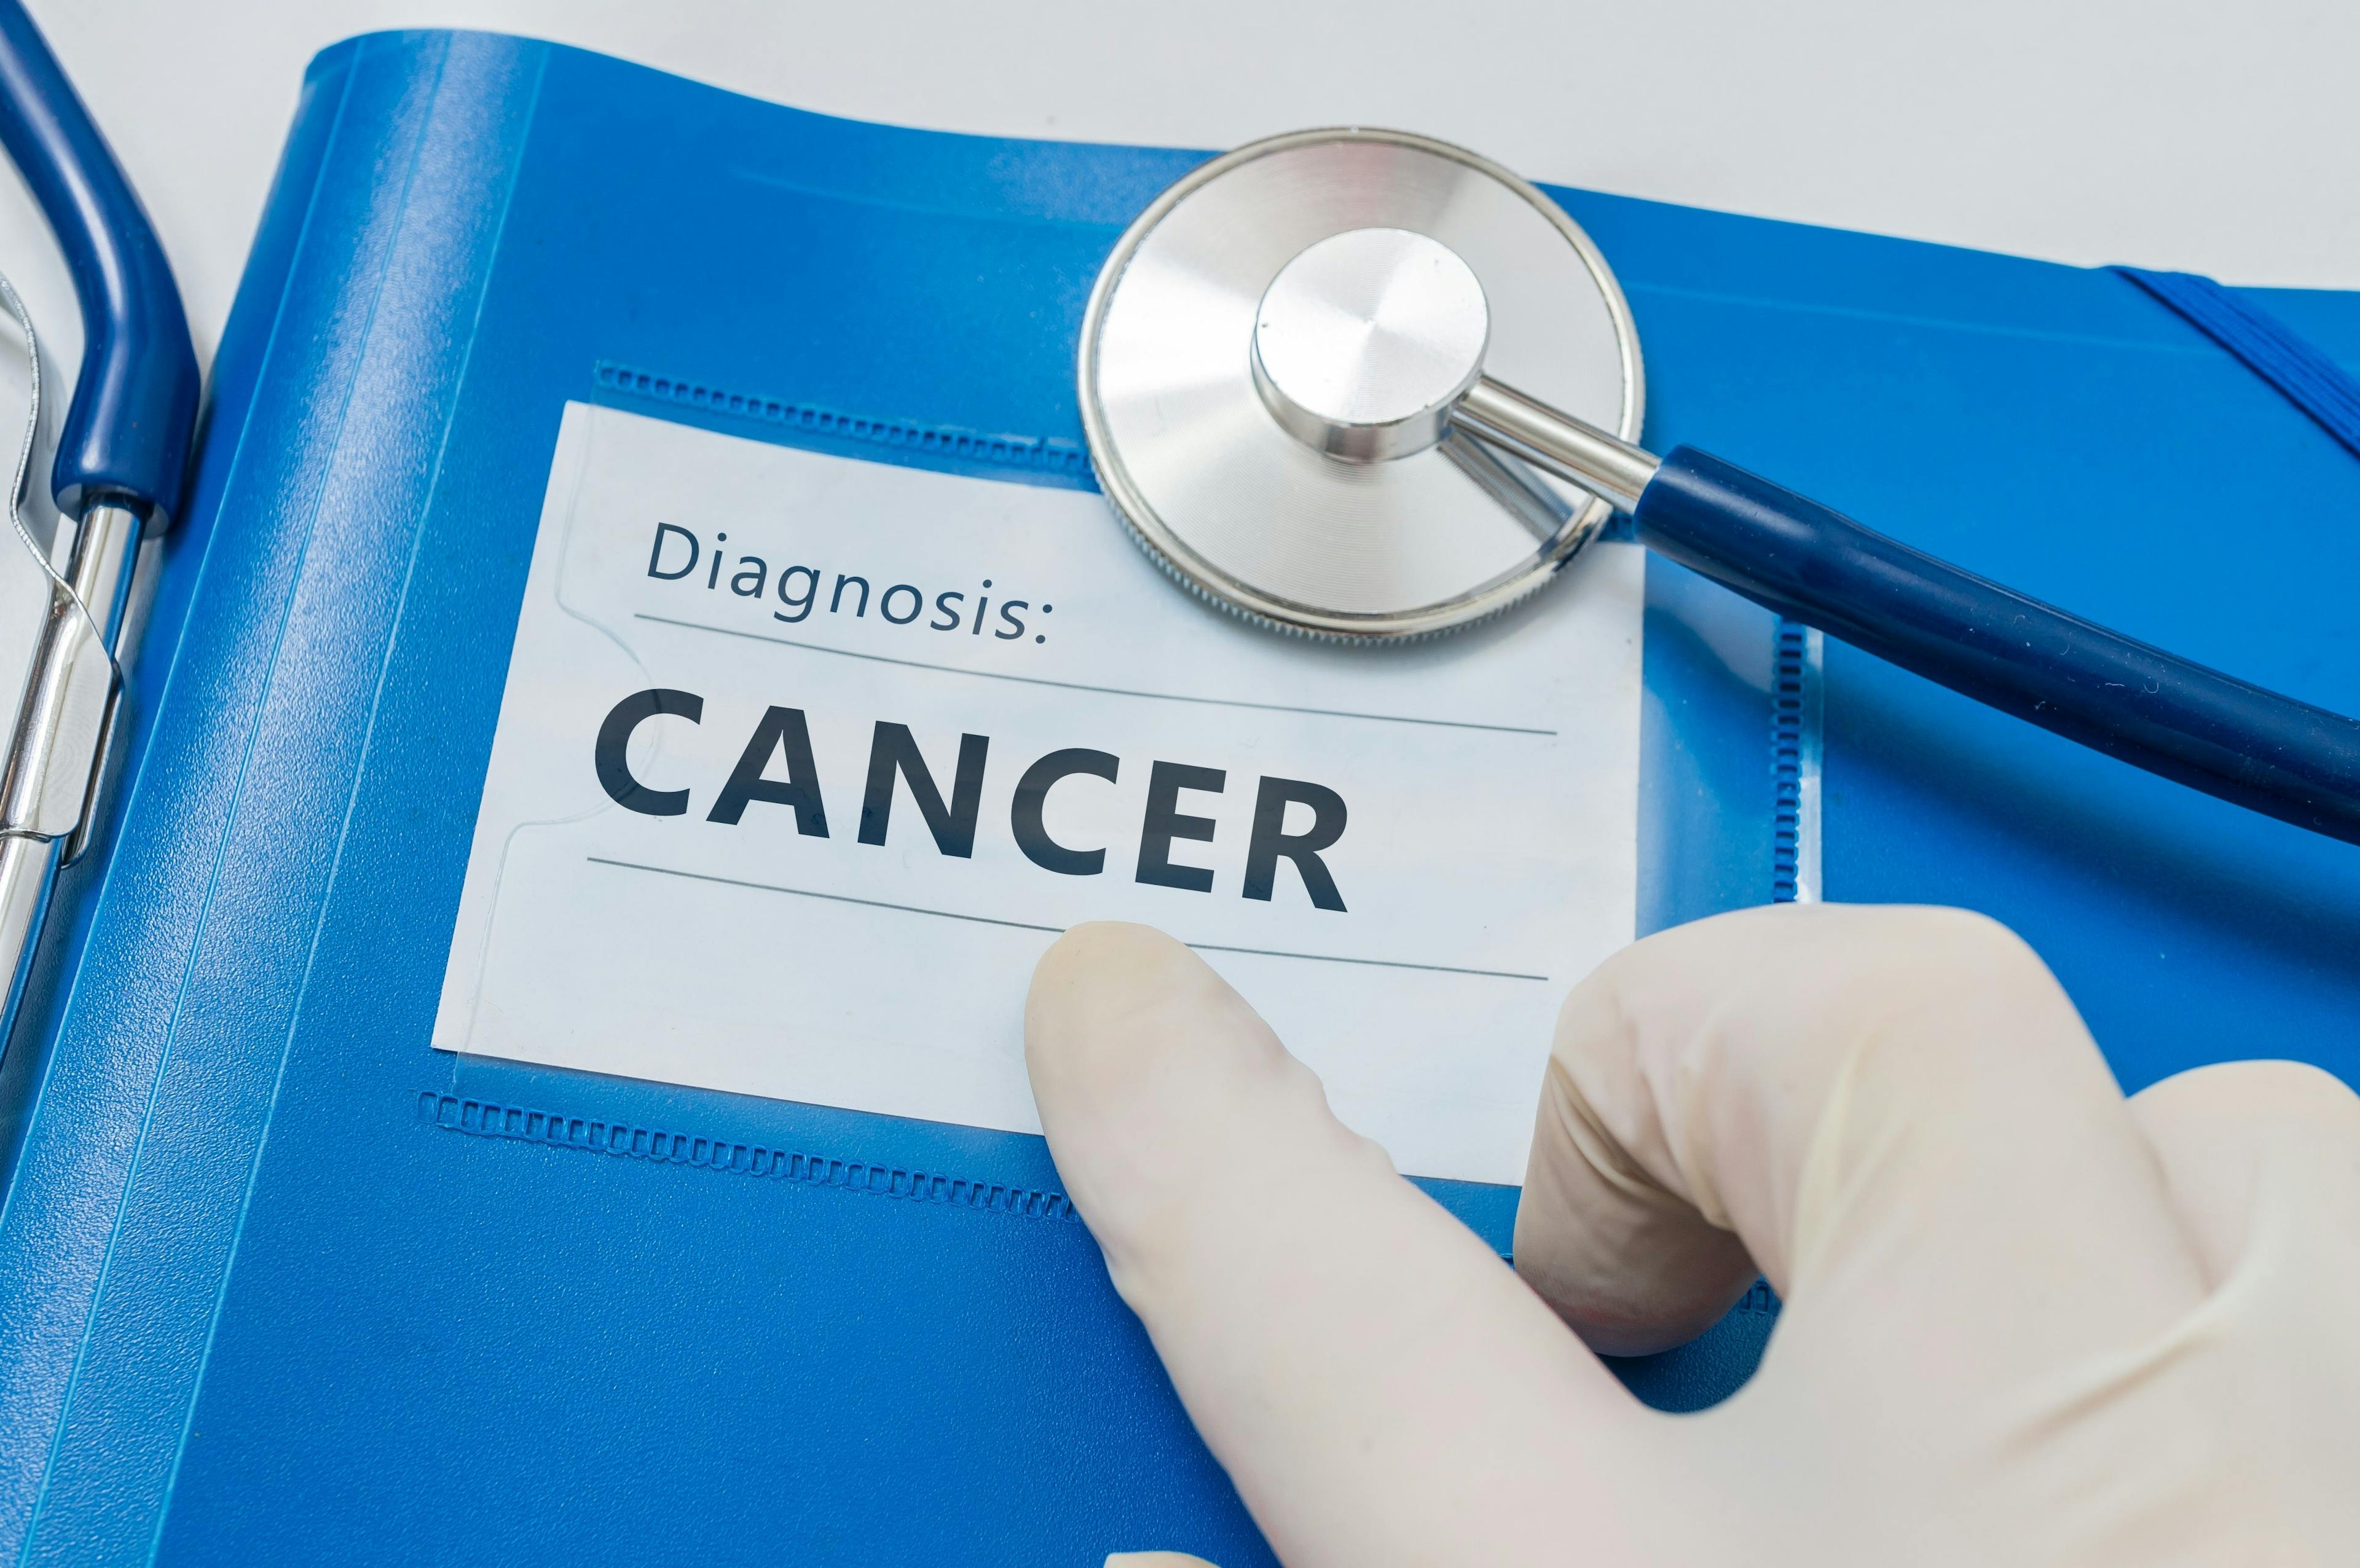 Blue folder with Cancer diagnosis | Image credit: vchalup - stock.adobe.com